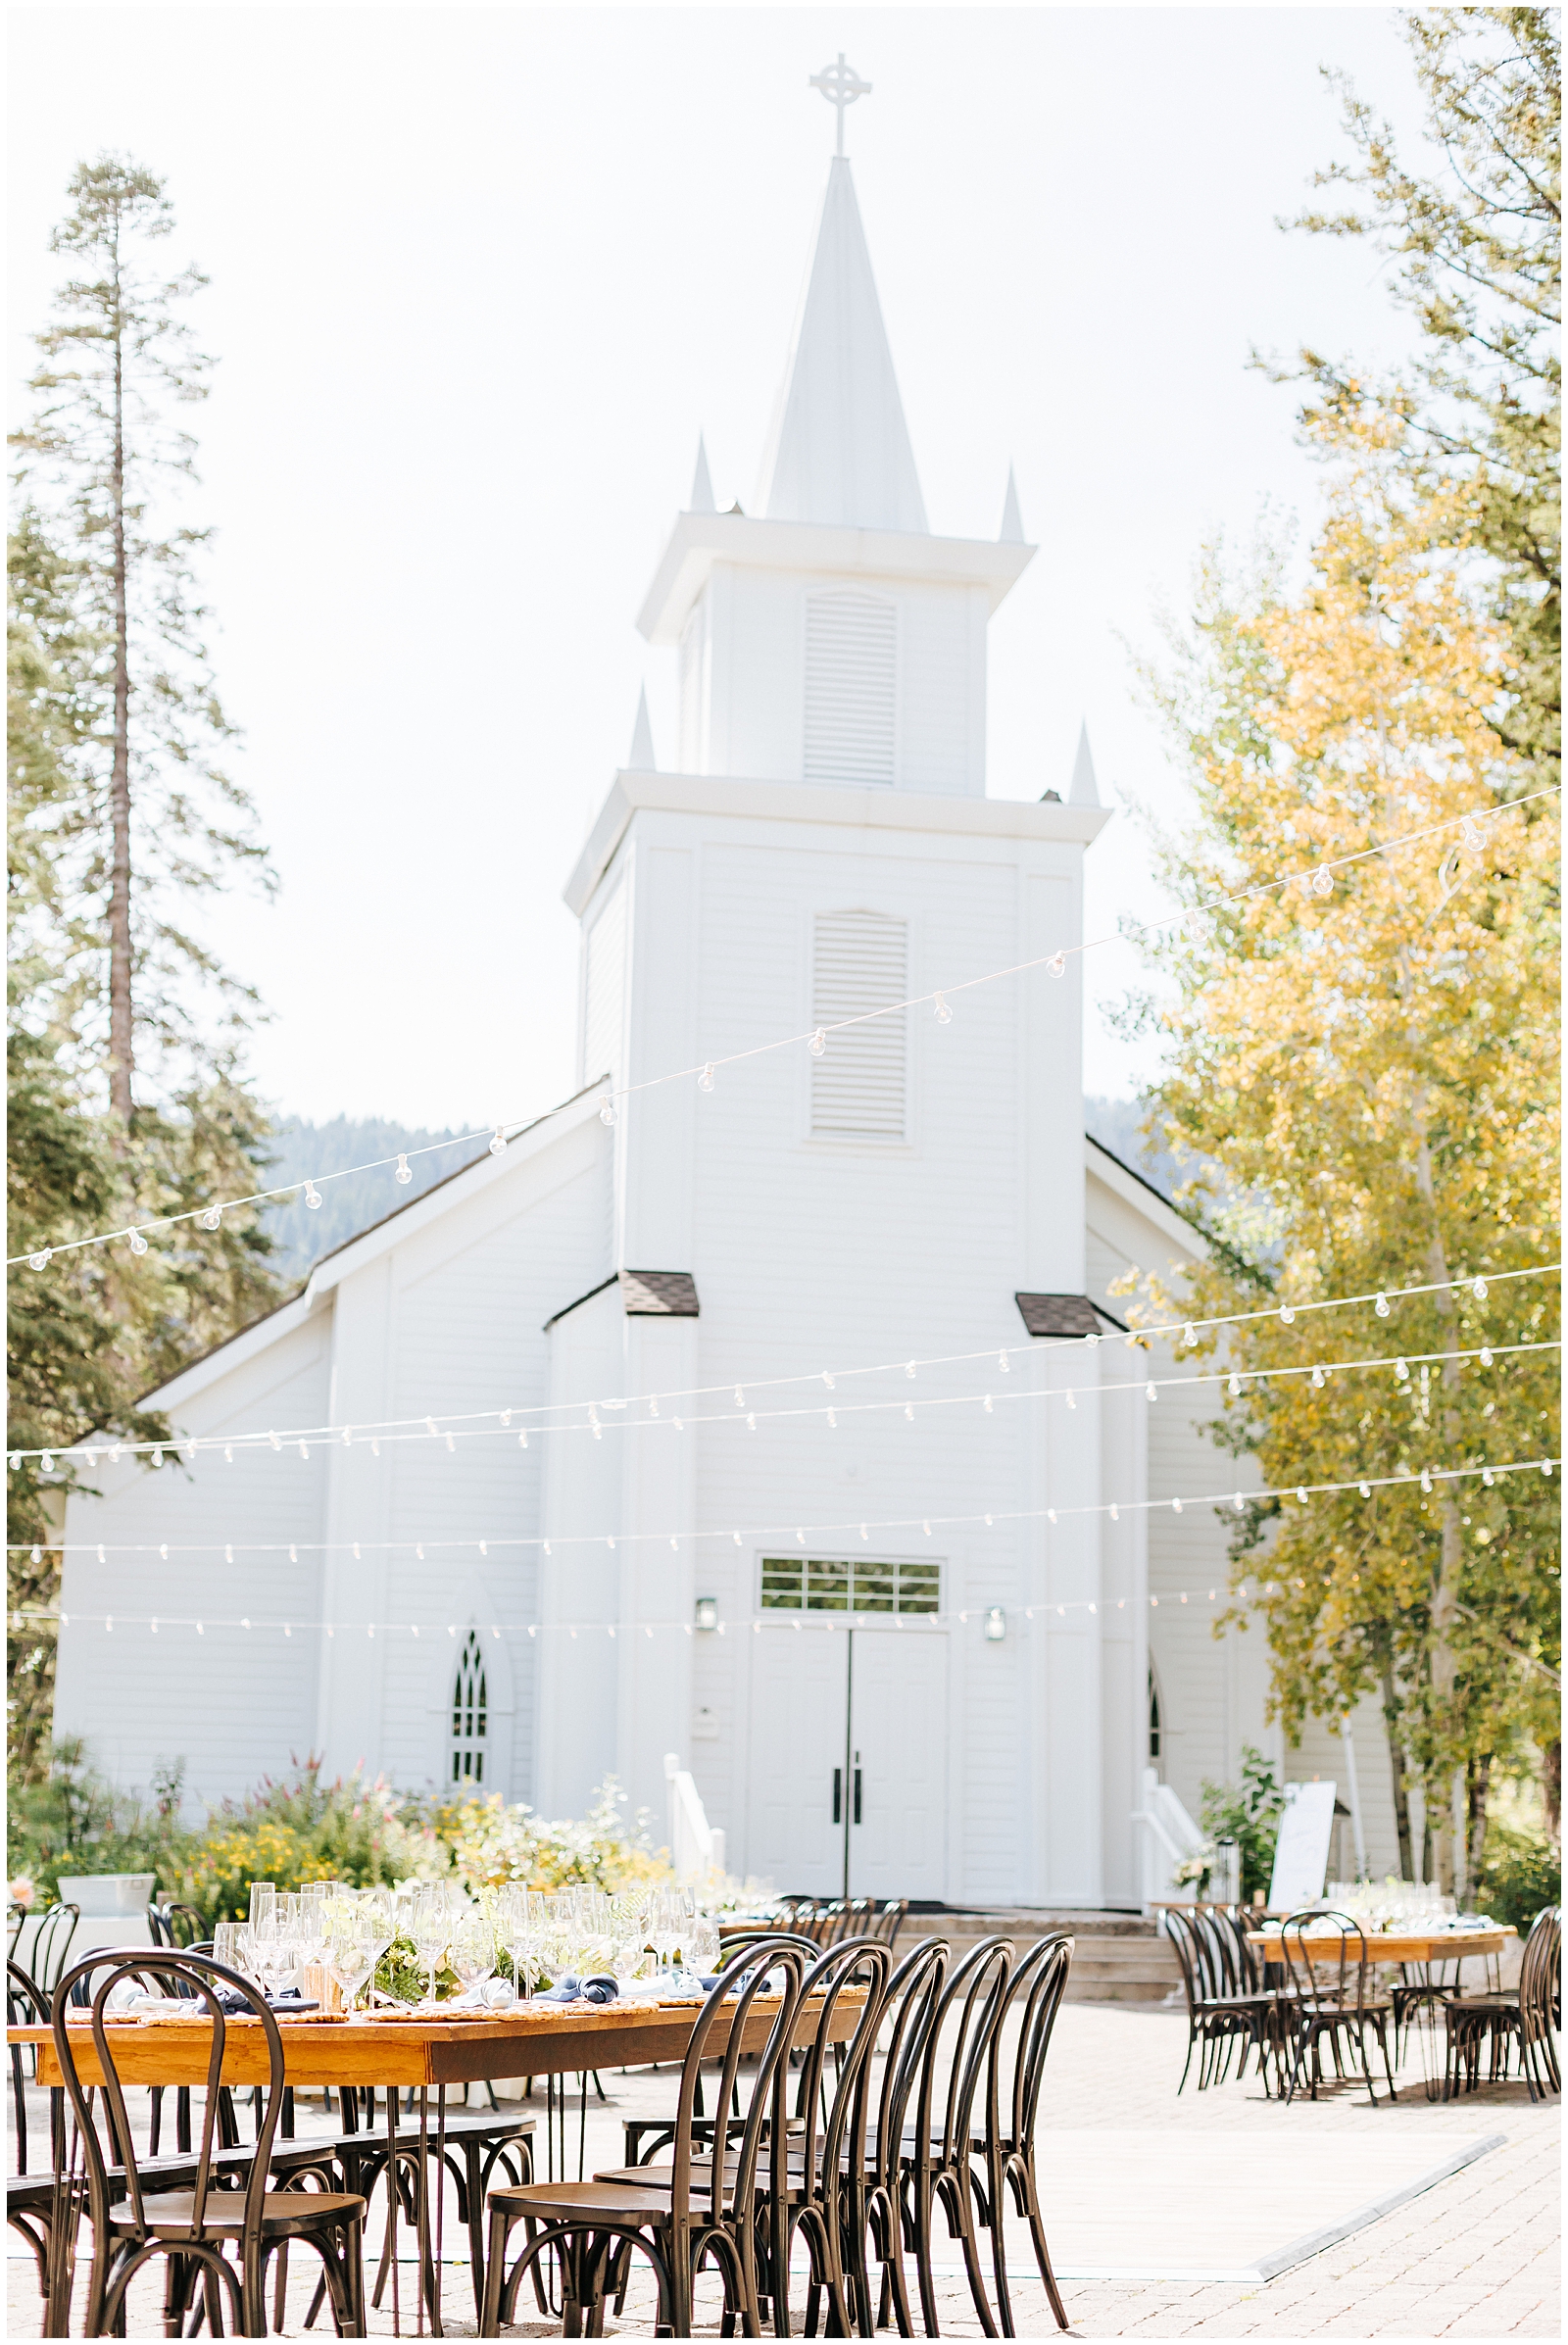 Dreamy Idaho Wedding Venues - Tamarack Resort